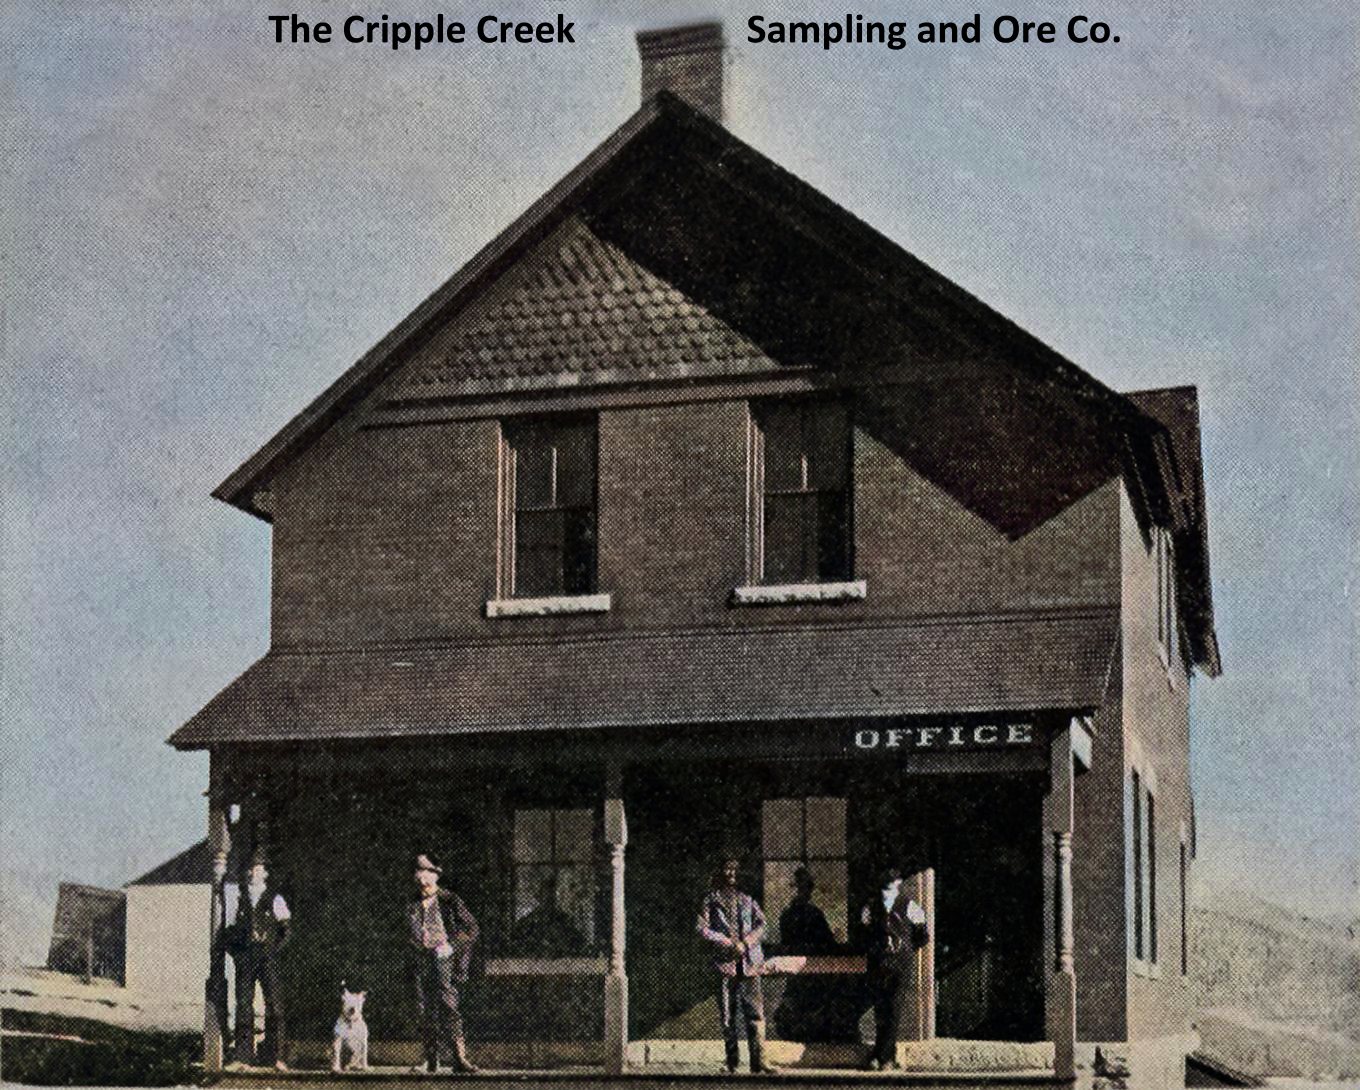 Cripple Creek Sampling and Ore Co. Office